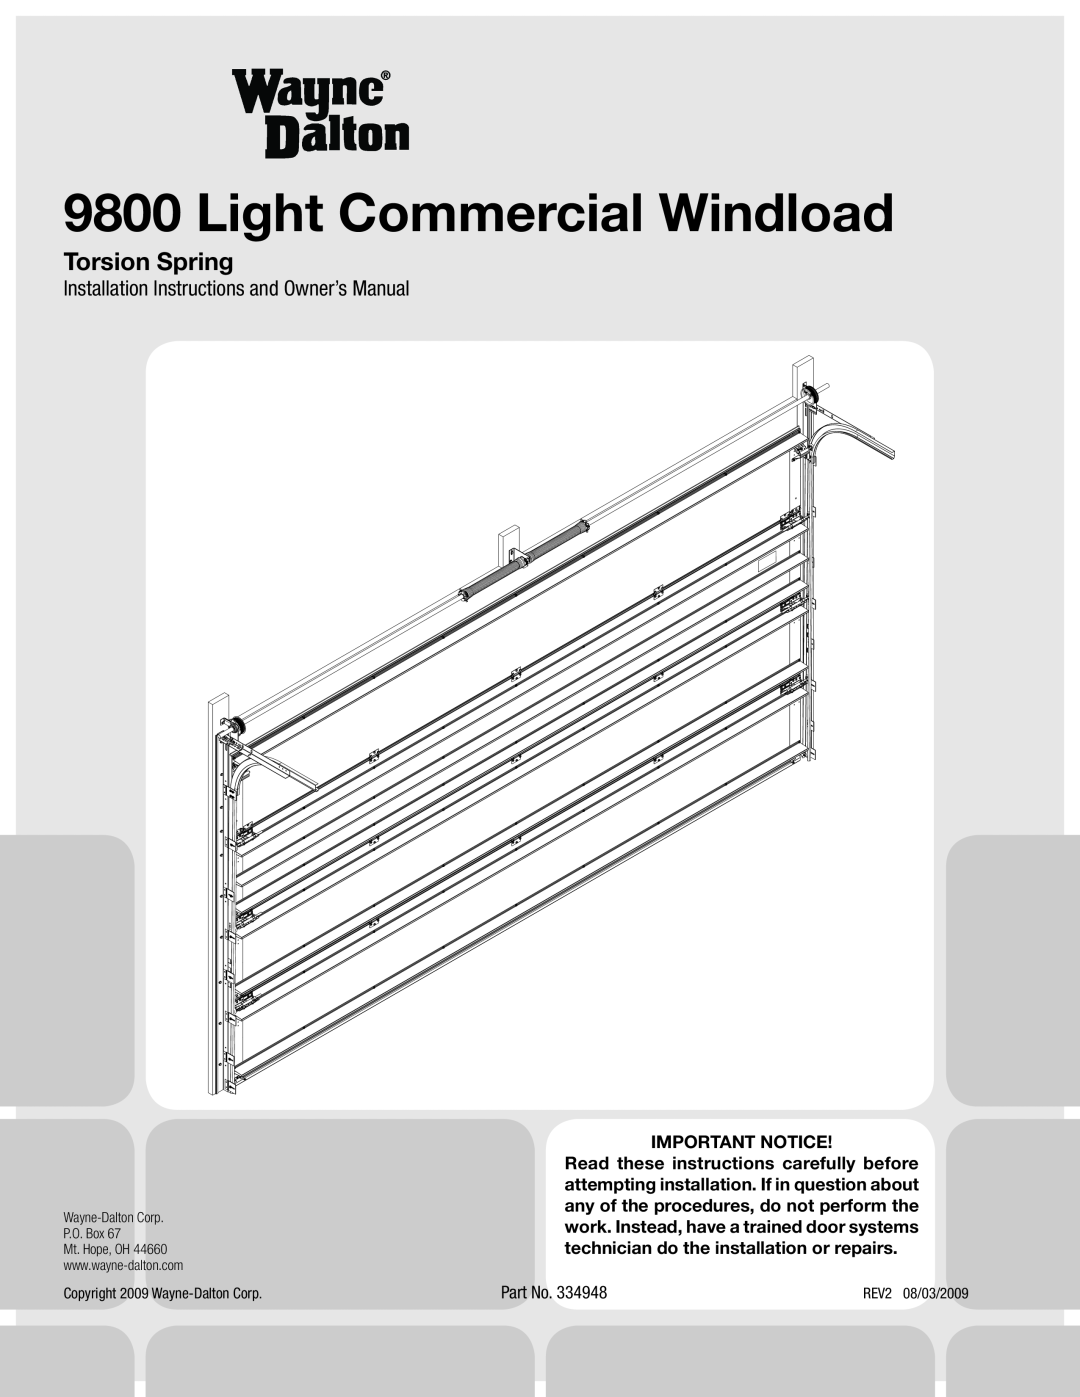 Wayne-Dalton 9800 installation instructions Light Commercial Windload, Torsion Spring 